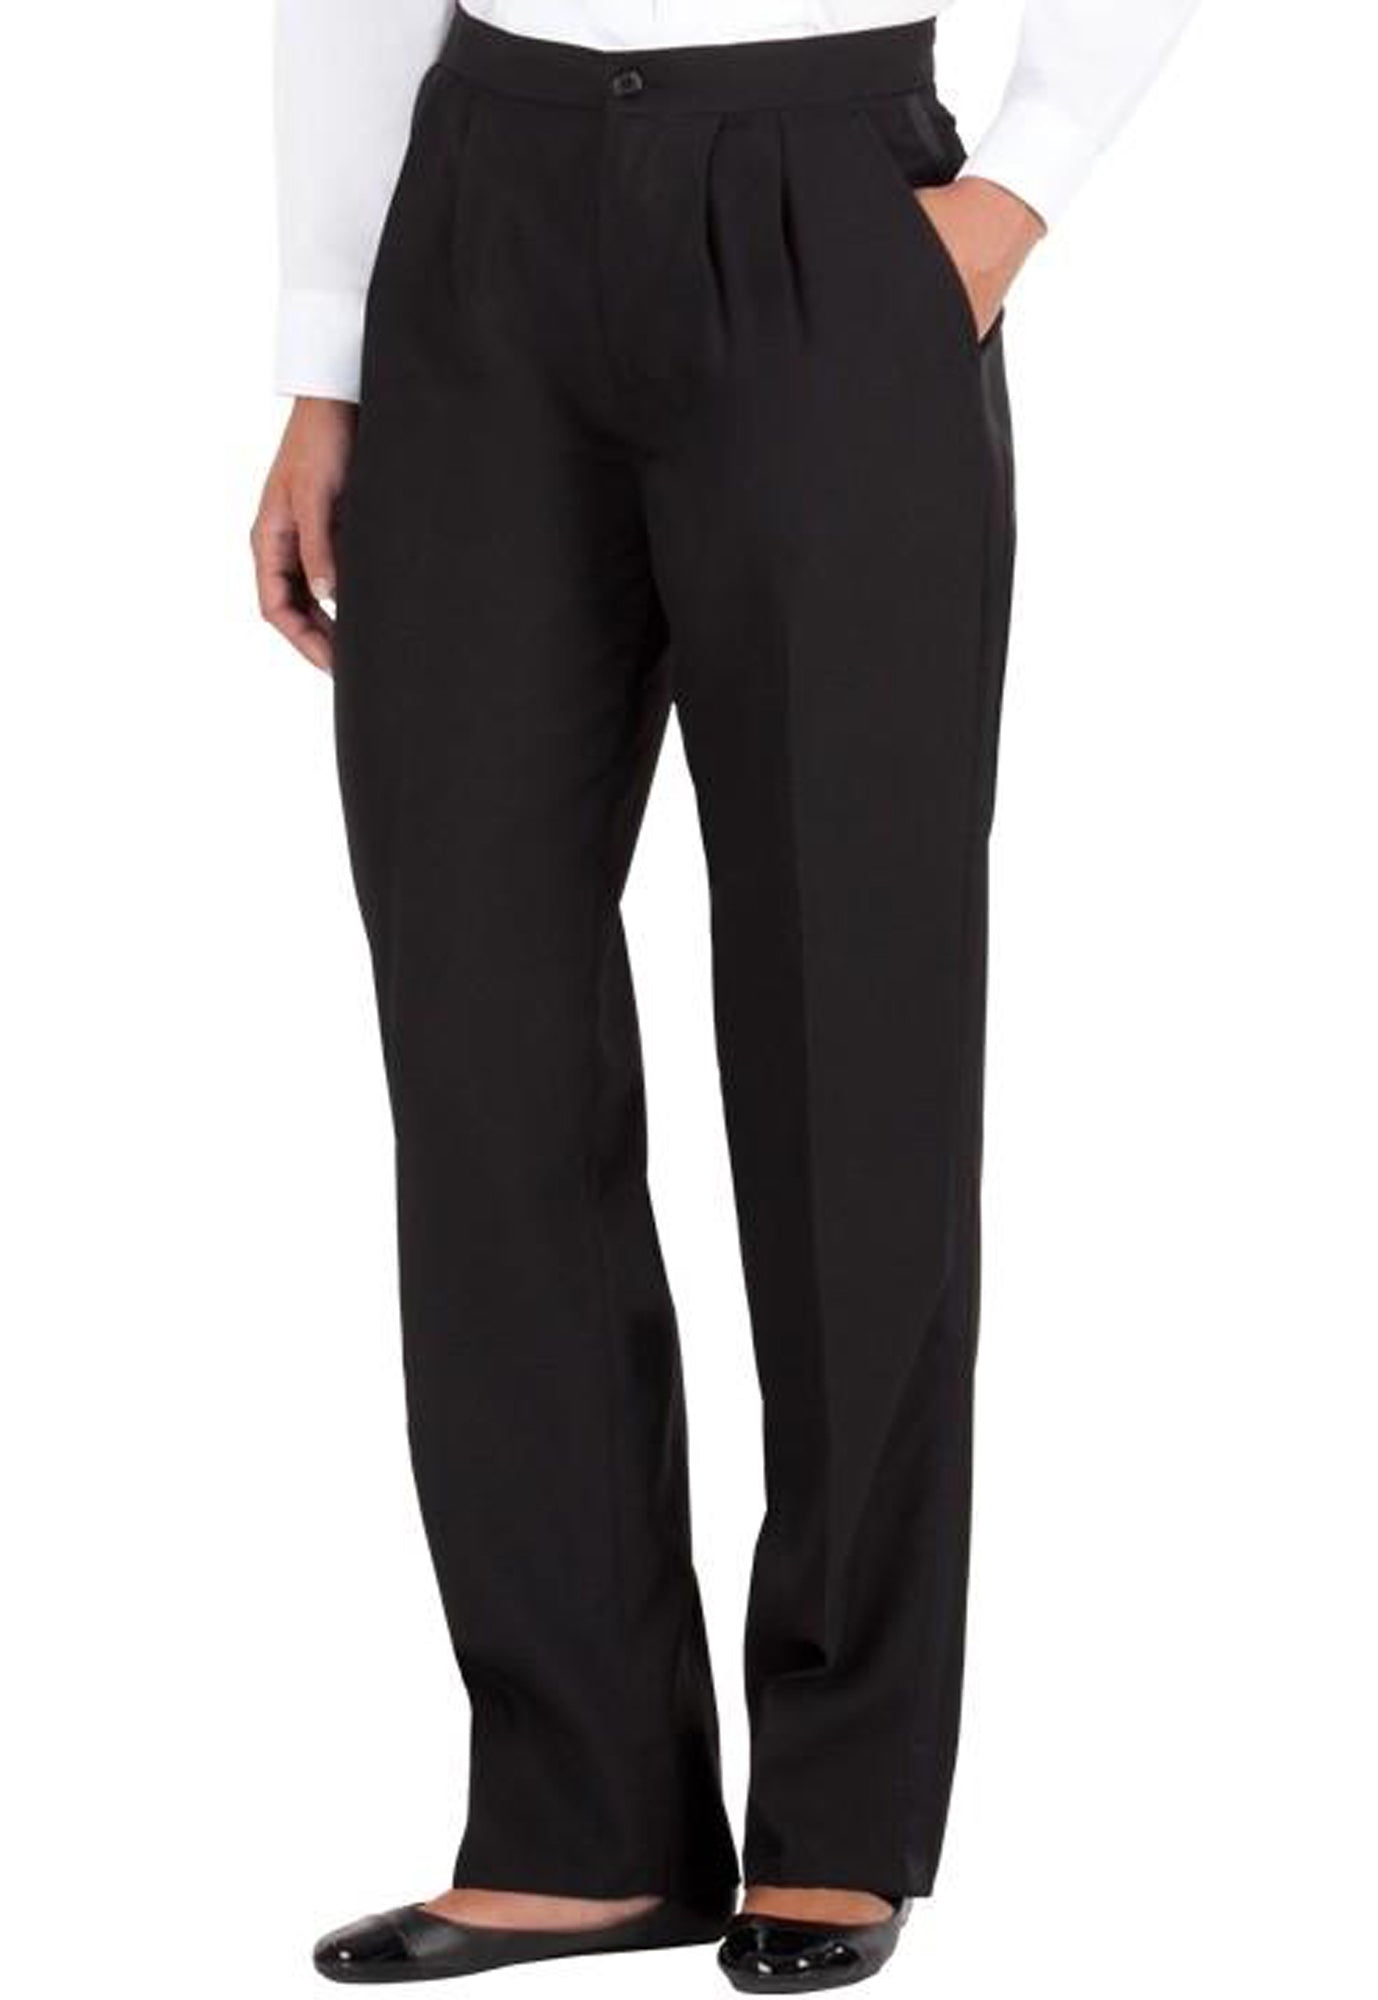 Buy the Pendleton Women's Black Pleated Suit/Dress Pants Size 8